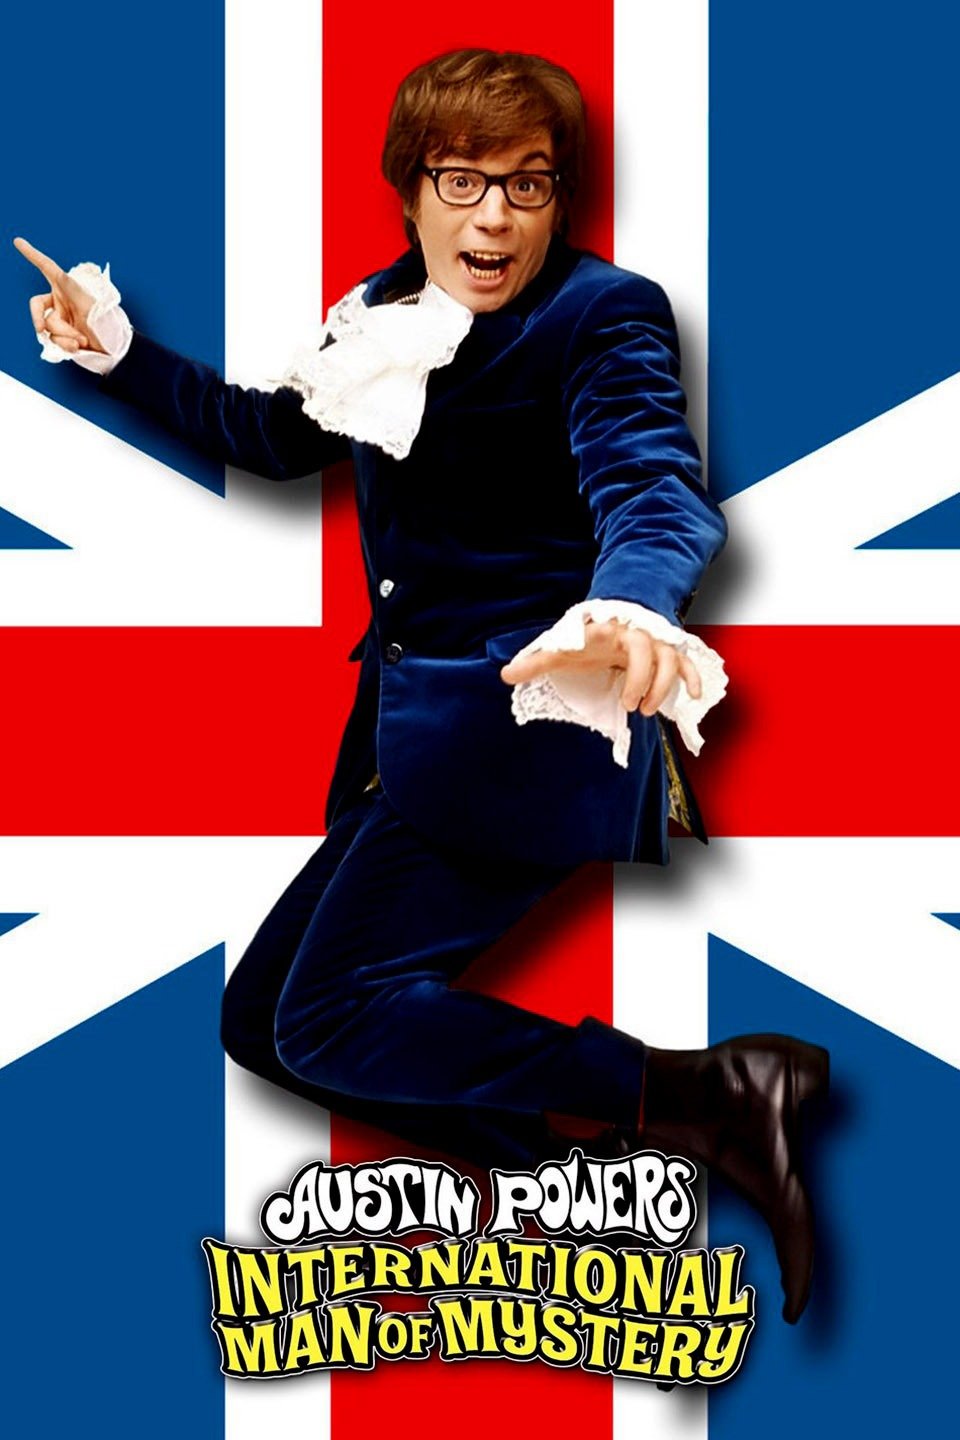 [MINI Super-HQ] Austin Powers: International Man of Mystery (1997) ออสติน เพาเวอร์ พยัคฆ์ร้ายใต้สะดือ ภาค 1 [1080p] [พากย์ไทย 2.0 + อังกฤษ DTS] [บรรยายไทย + อังกฤษ] [เสียงไทย + ซับไทย] [ONE2UP]